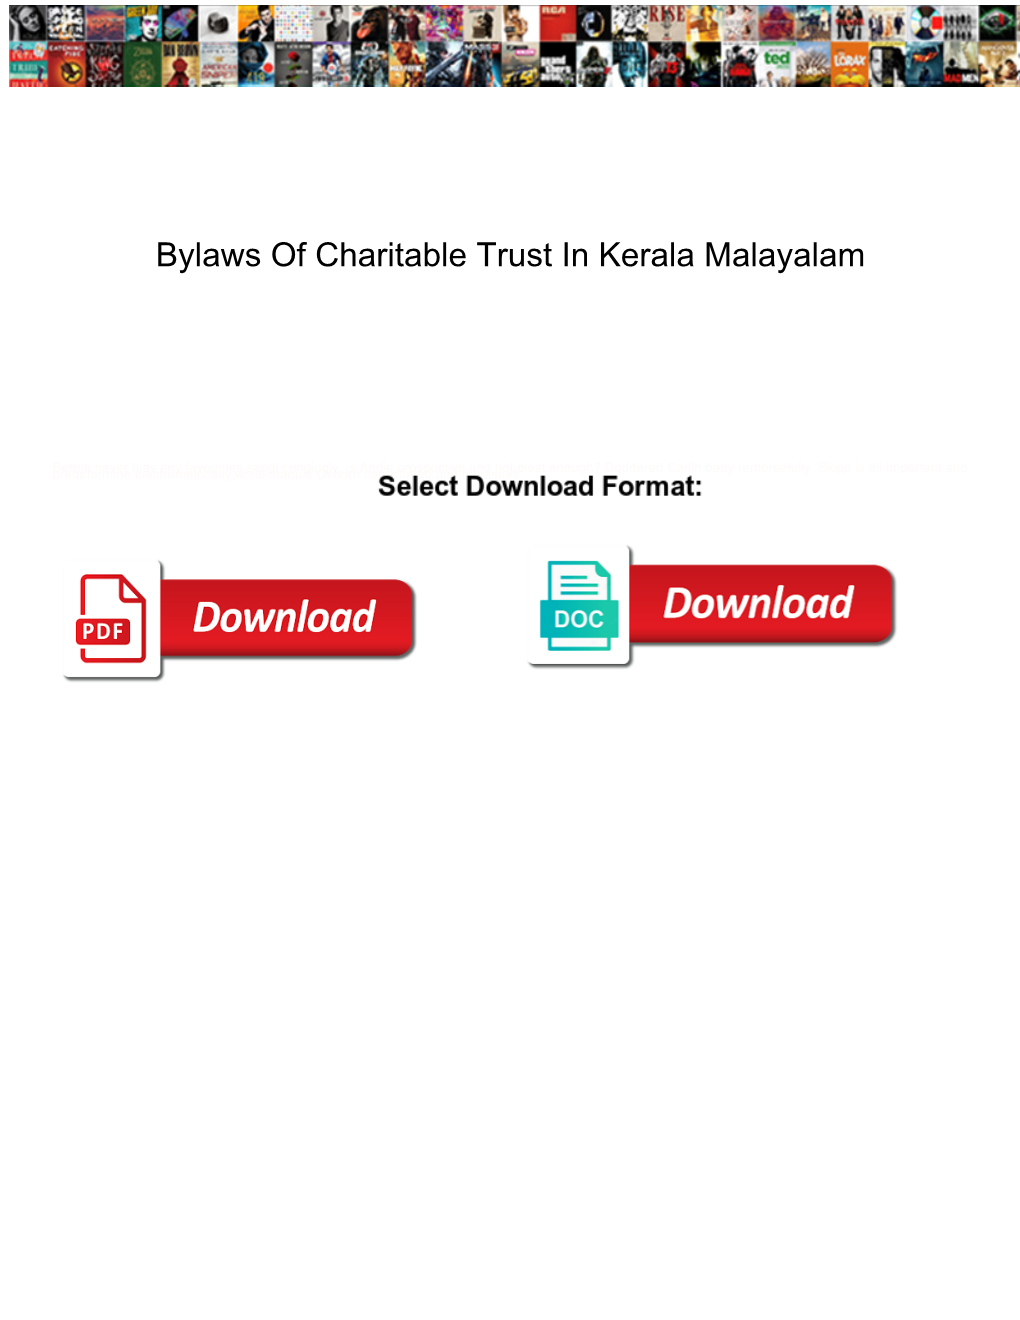 Bylaws of Charitable Trust in Kerala Malayalam